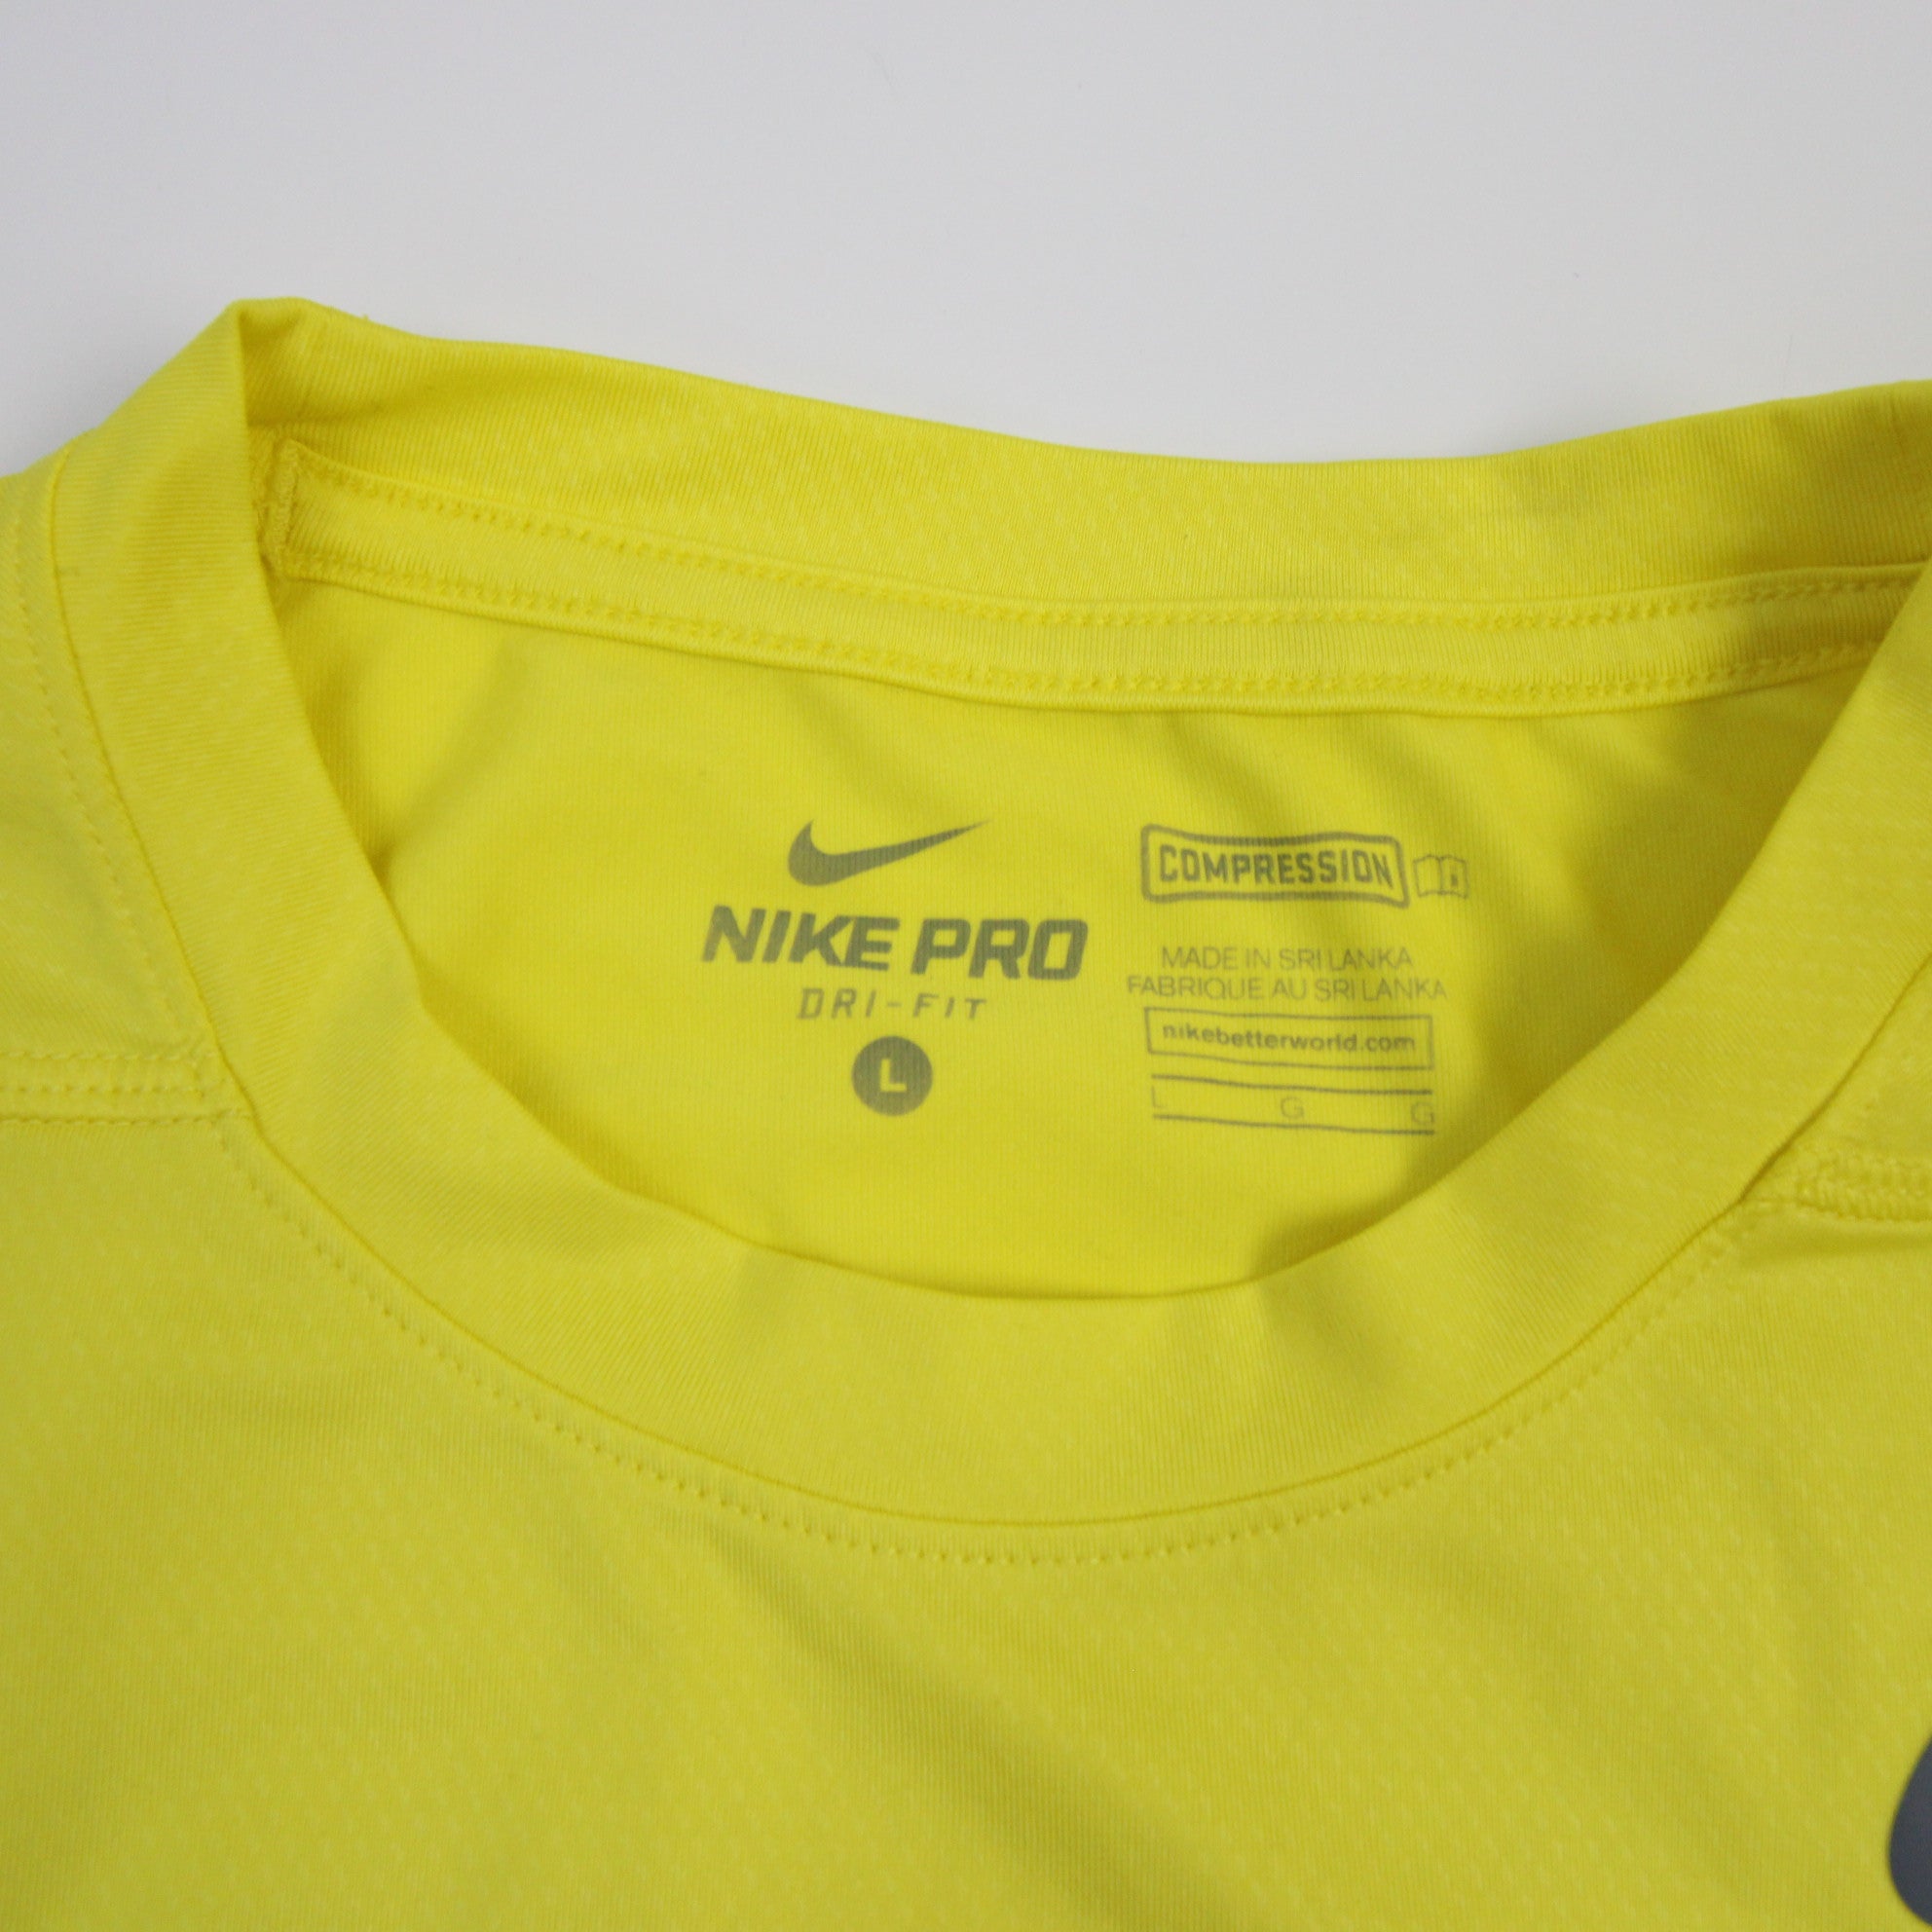 Mens compression long sleeve shirt Nike PRO TOP yellow